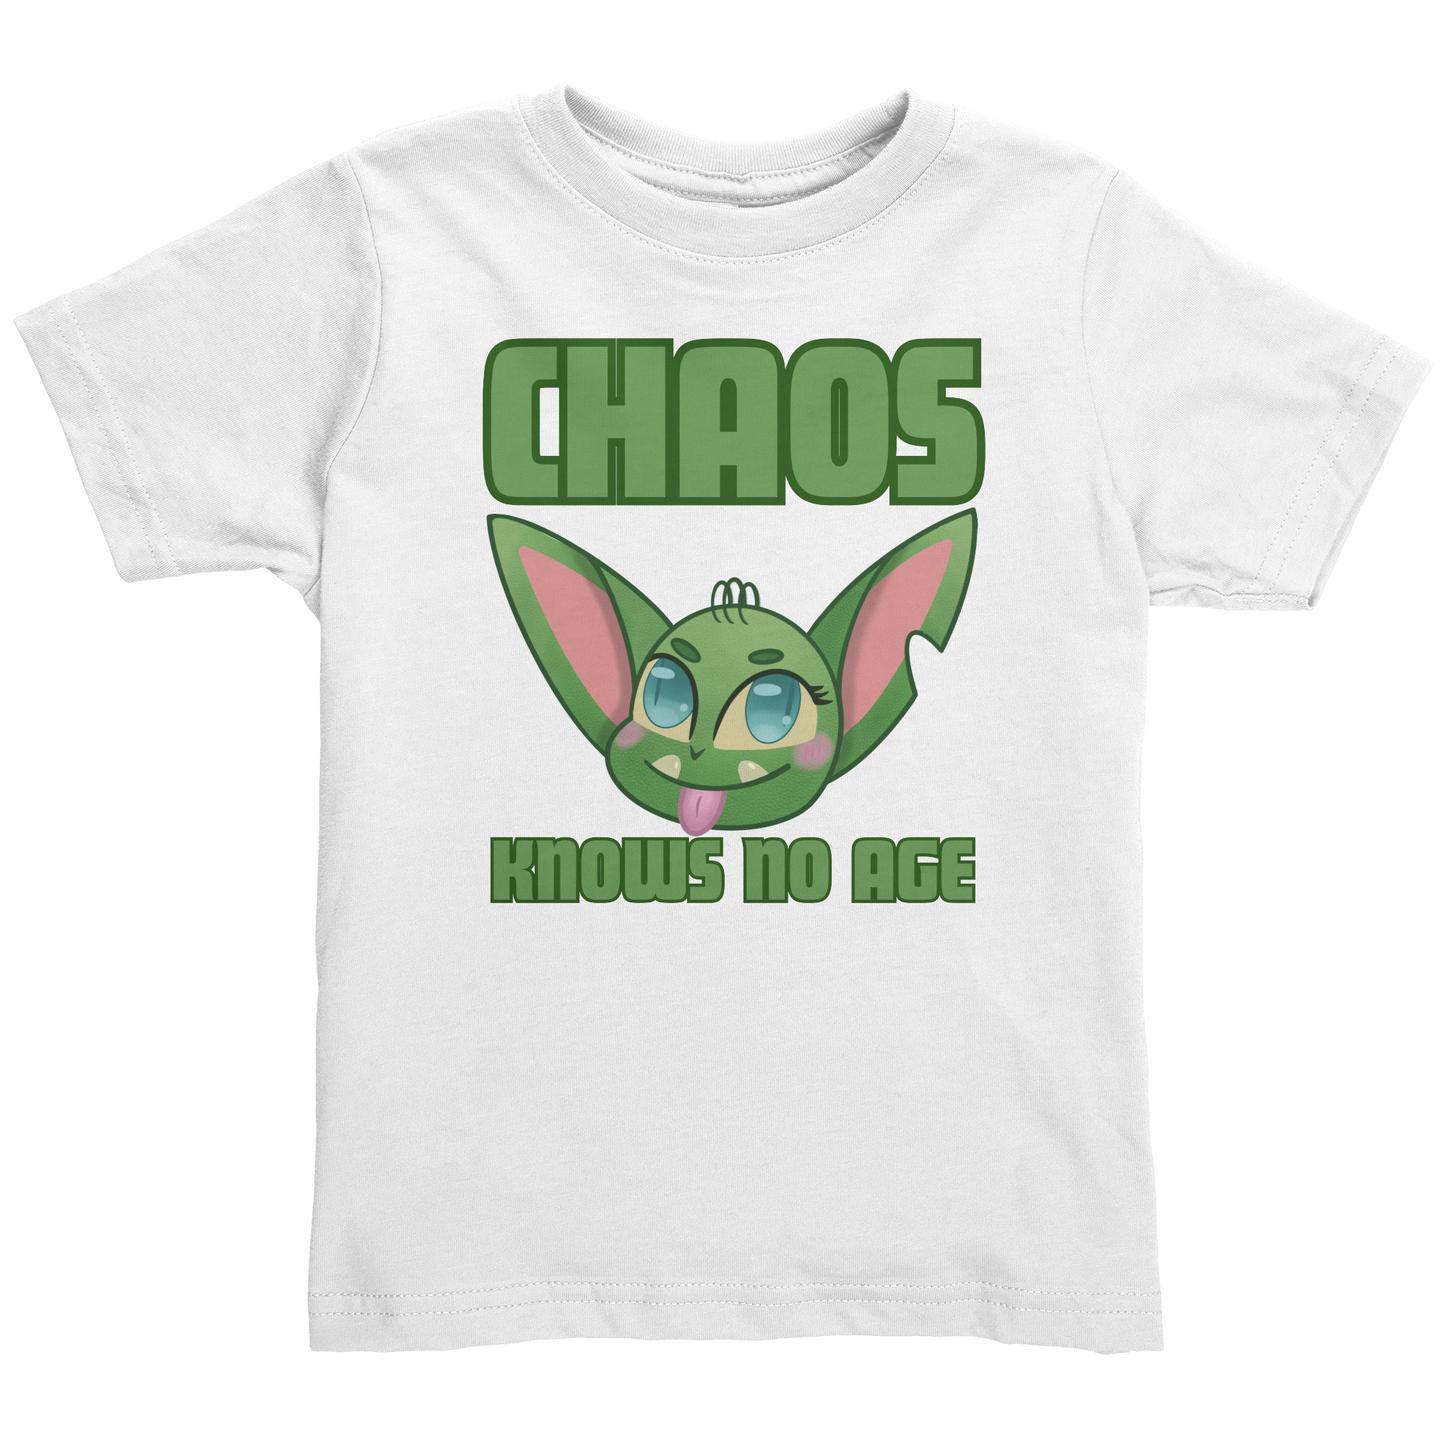 Chaos Knows No Age Toddler T-Shirt